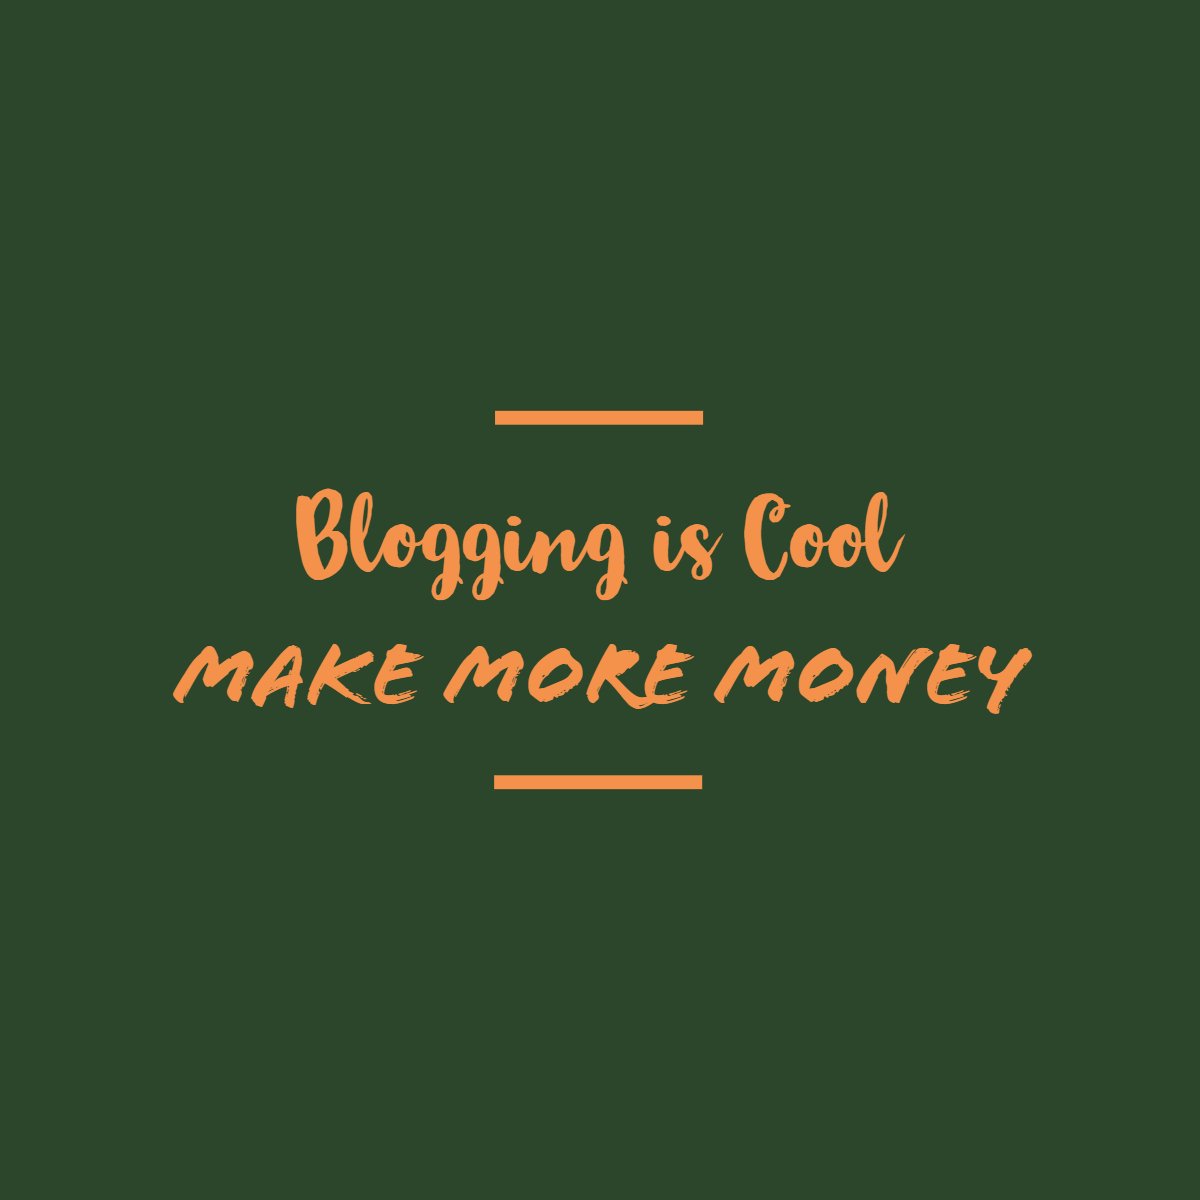 bloggingiscool.com helps bloggers get better in blogging